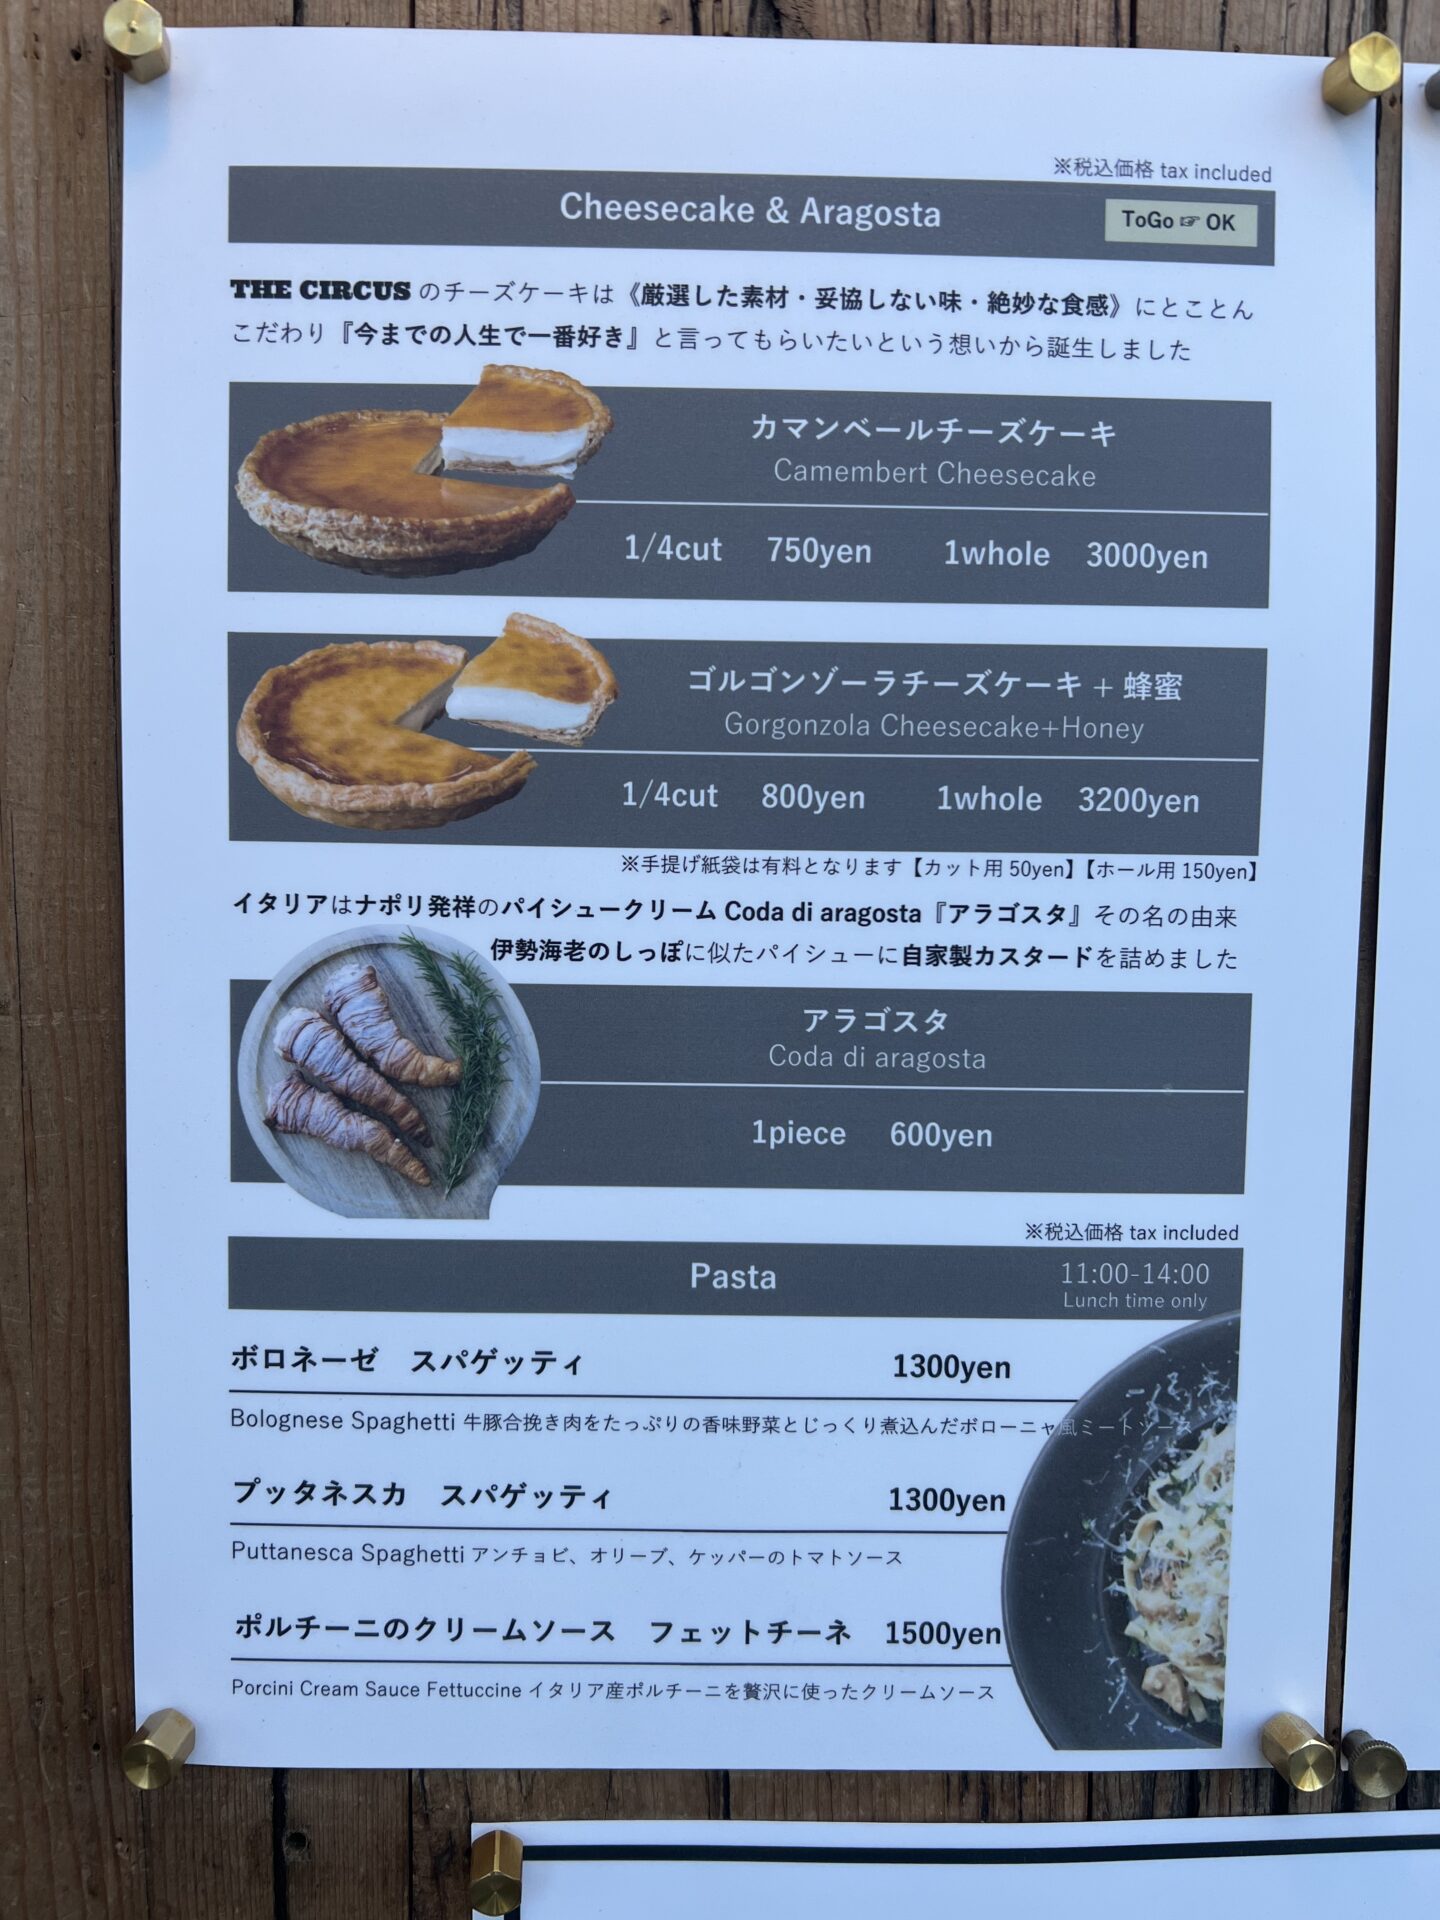 THE CIRCUS KAMAKURA menu